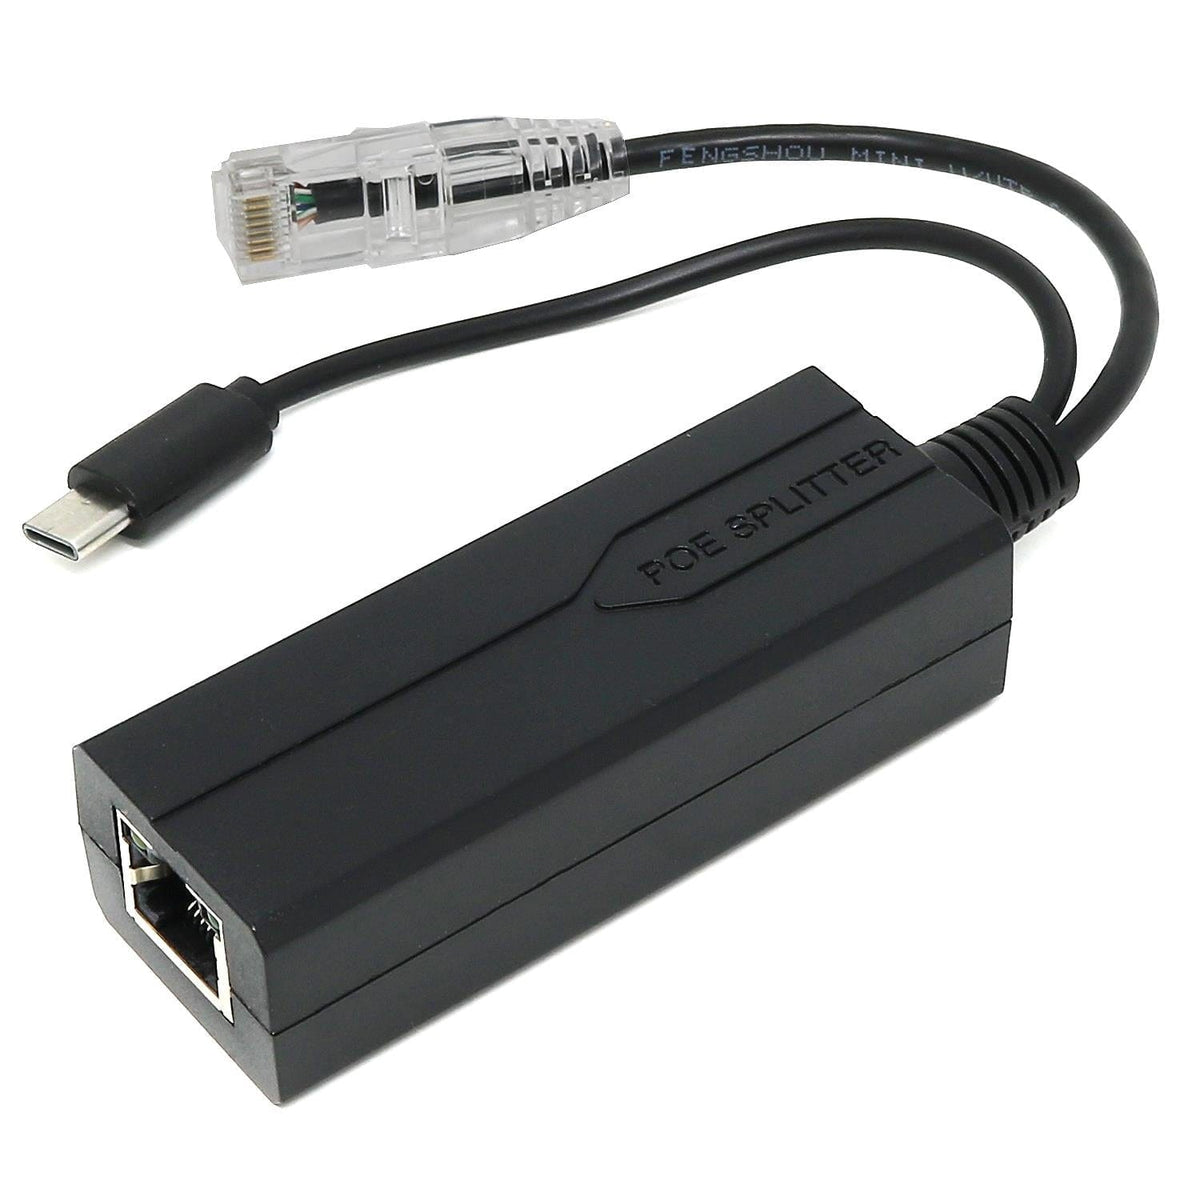 USB0502, poe splitter, poe splitter 5v, 5v poe splitter, poe splitter for  cctv ,poe splitter for ipc, power over ethernet